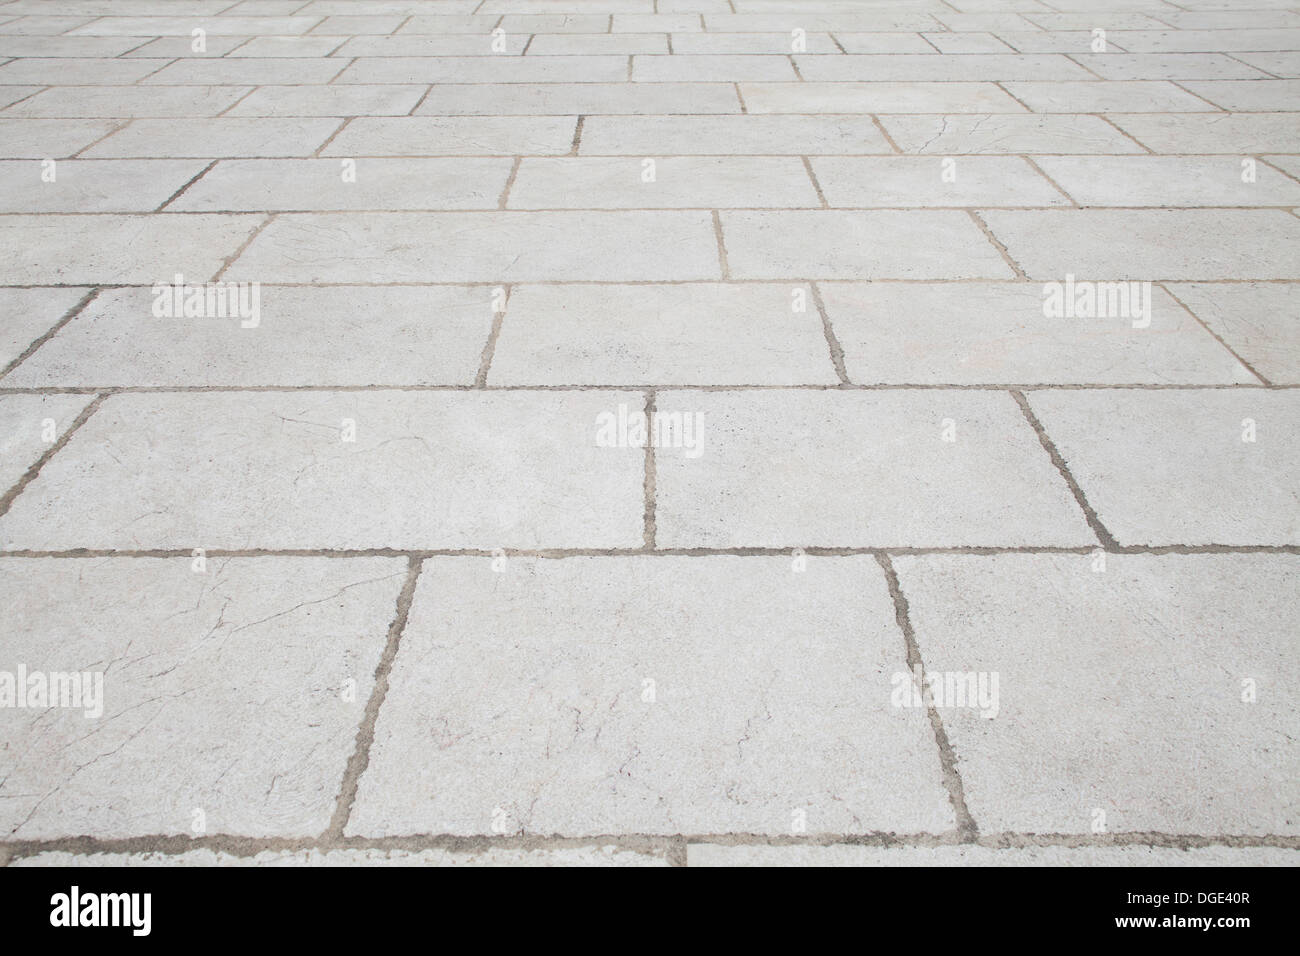 Pavimento de piedra laja blanca o gris de fondo textura de mosaico Foto de stock